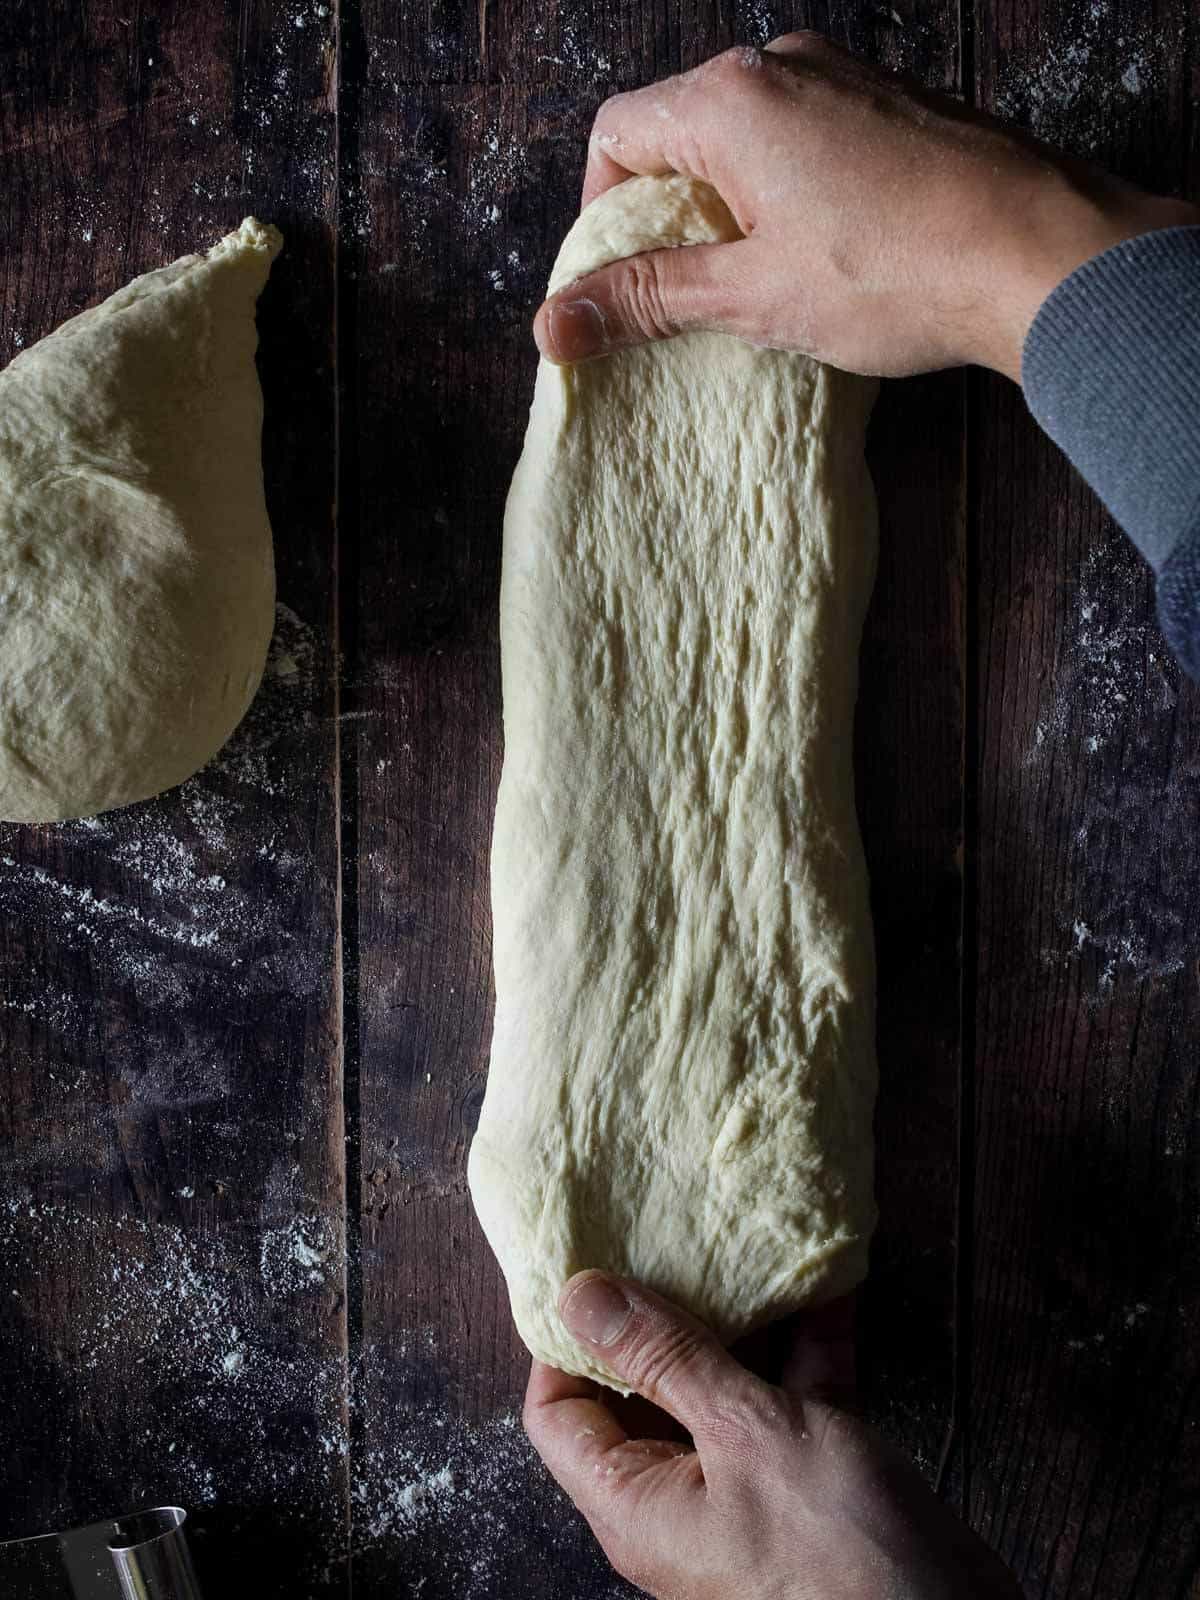 Stretching Focaccia bread dough